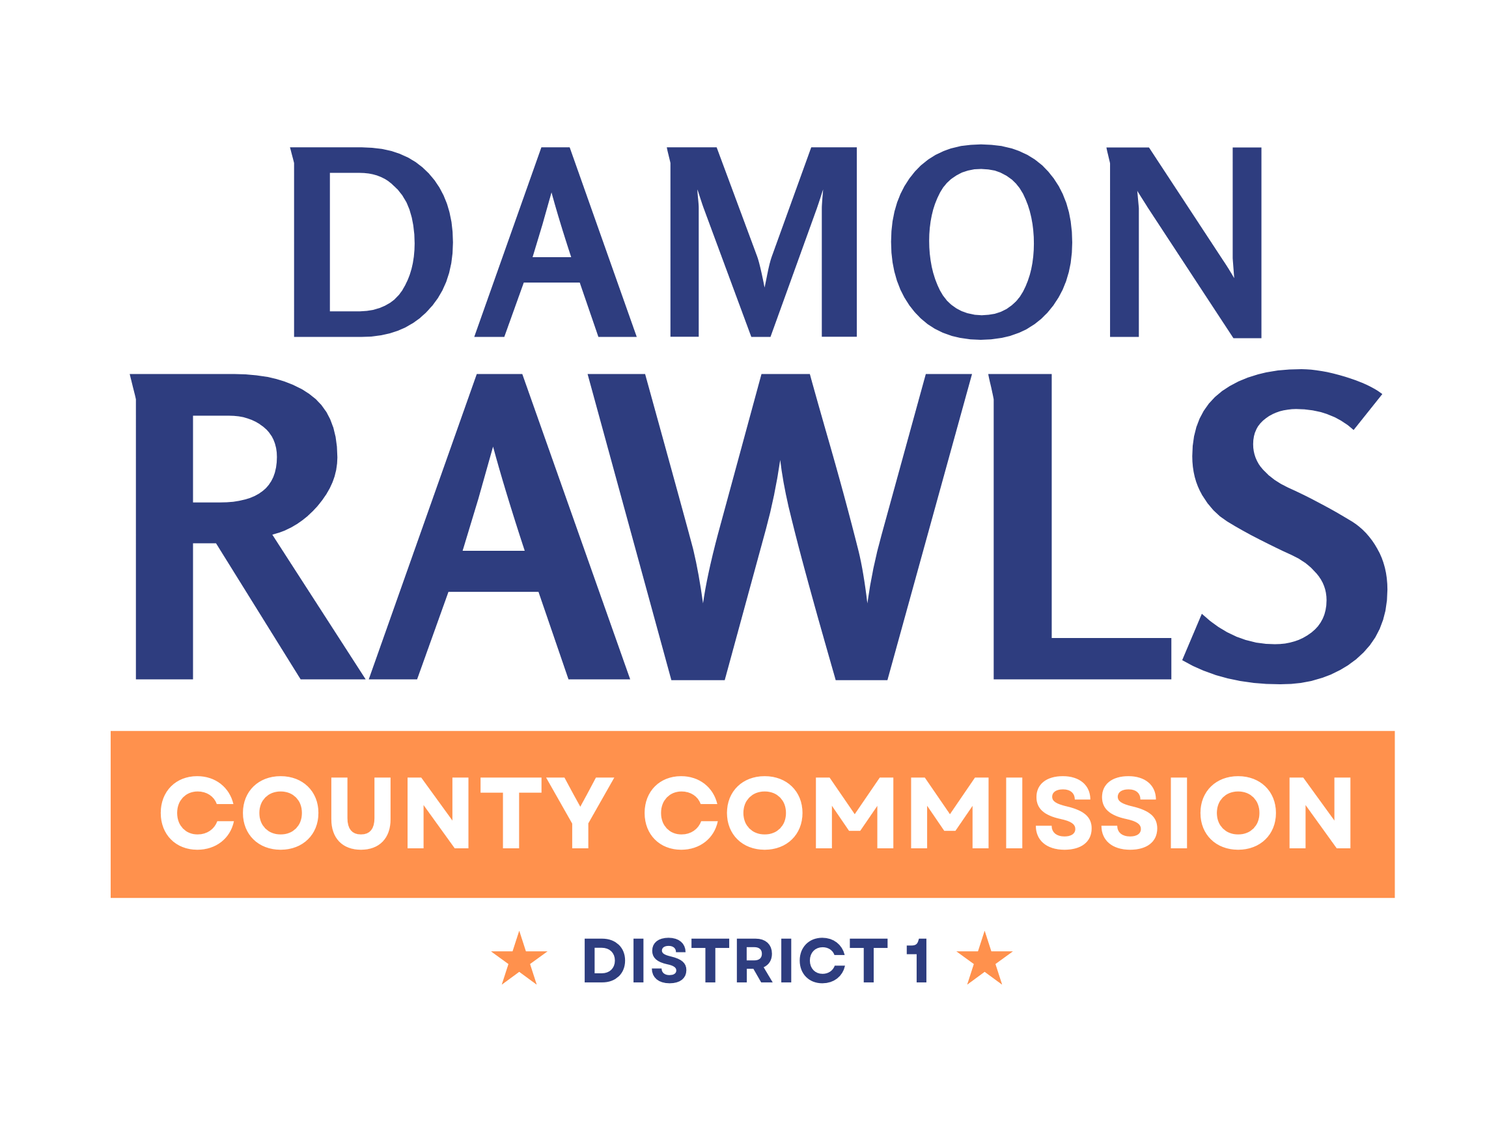 Damon Rawls County Commission 1 